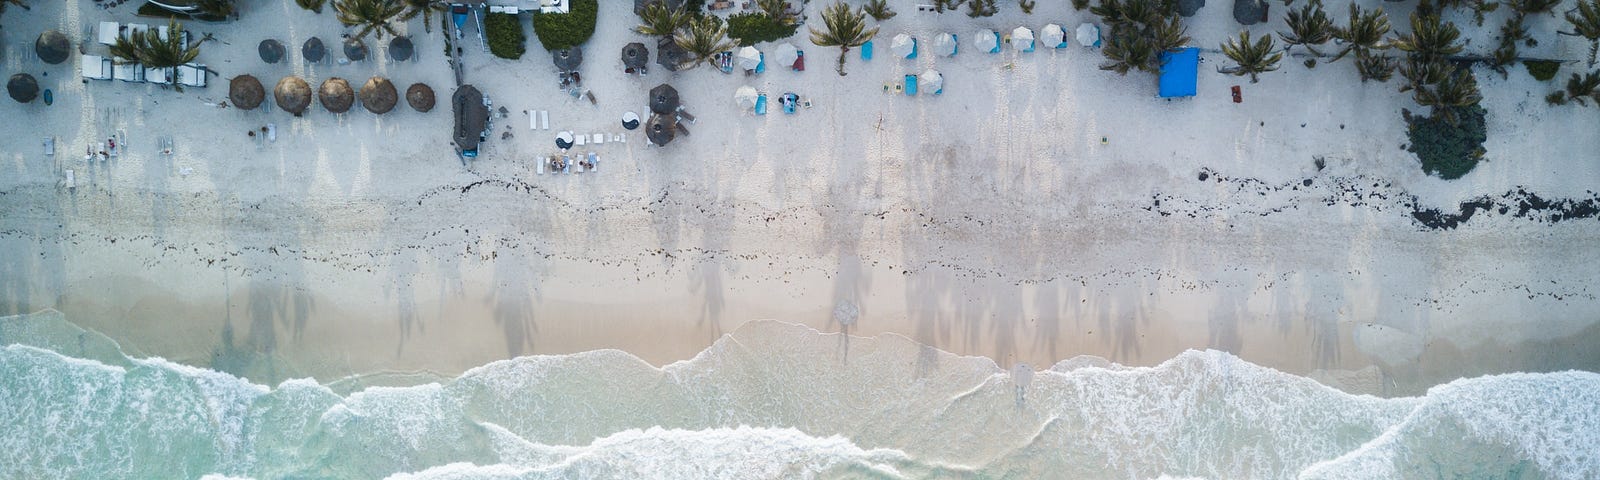 overhead shot of sea and beach, Mexico